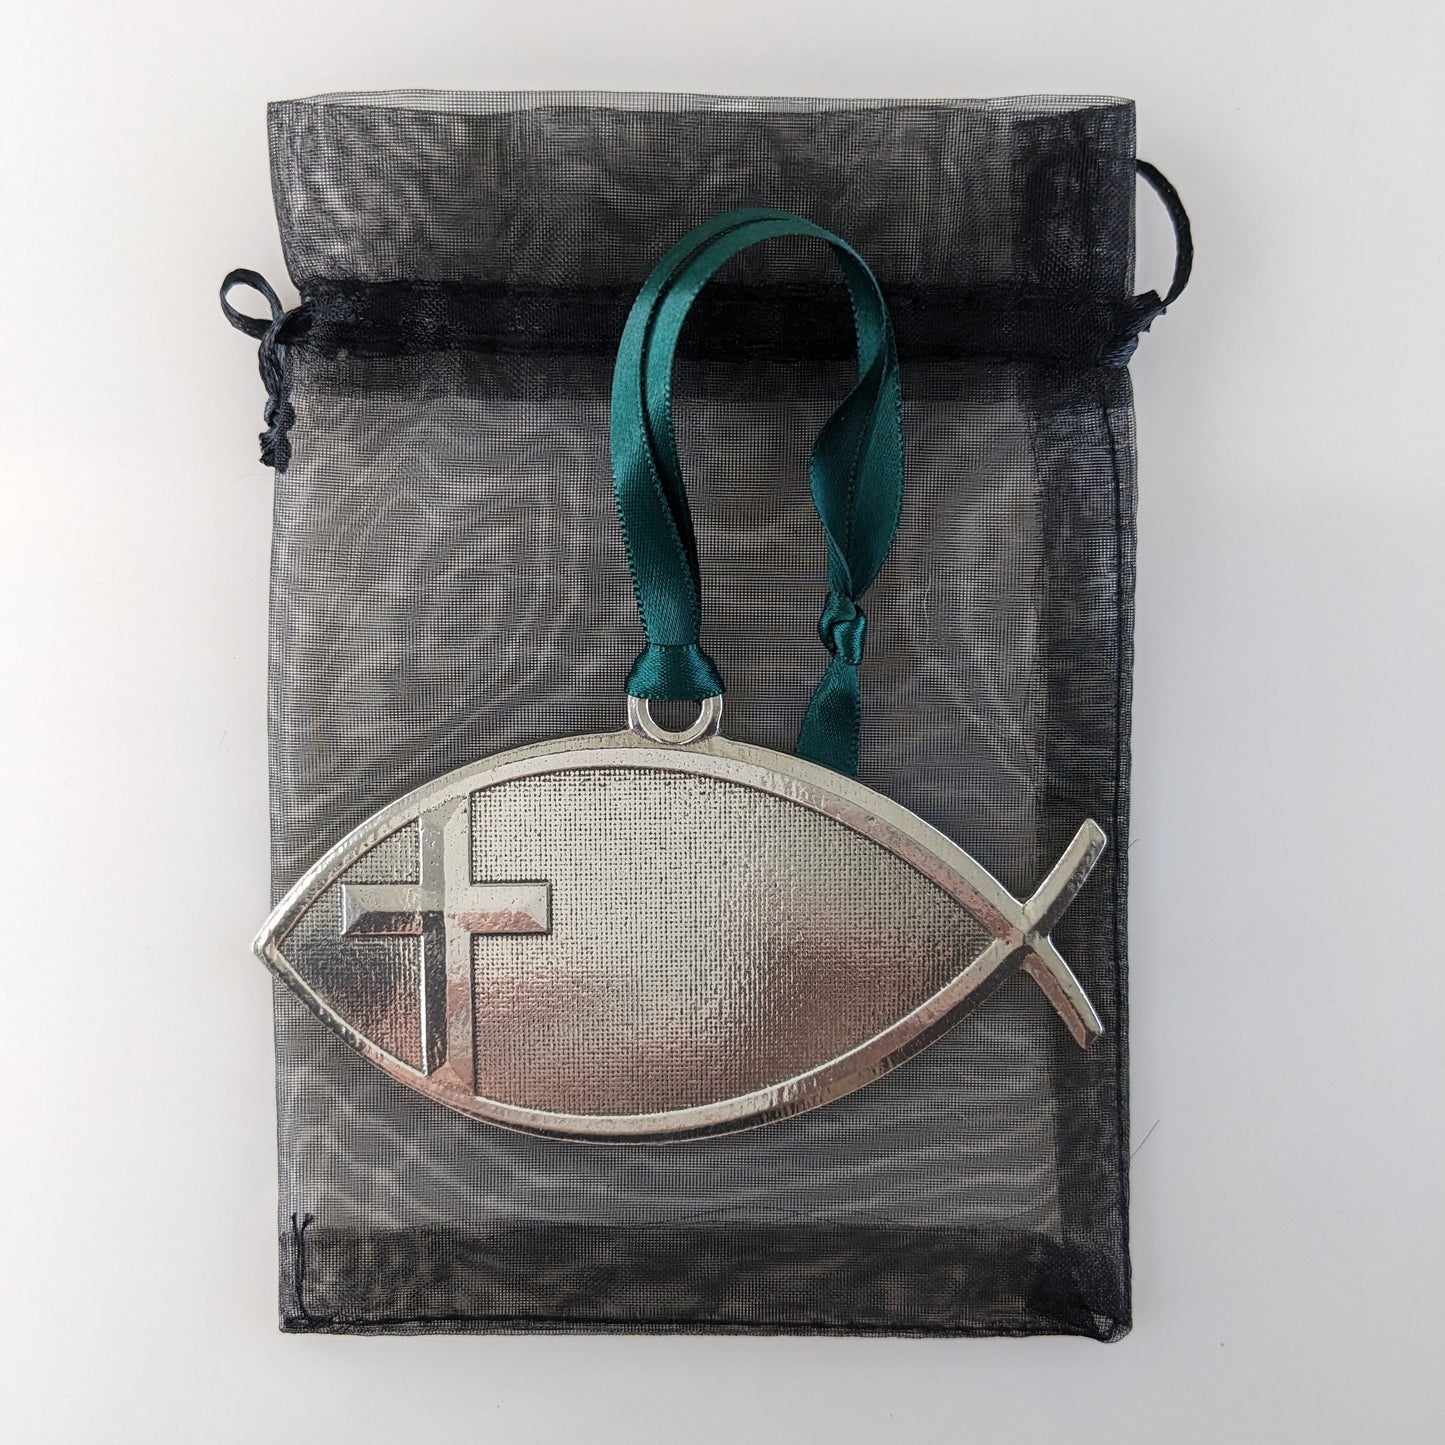 Ichthys, Jesus Fish pewter Christmas Ornament